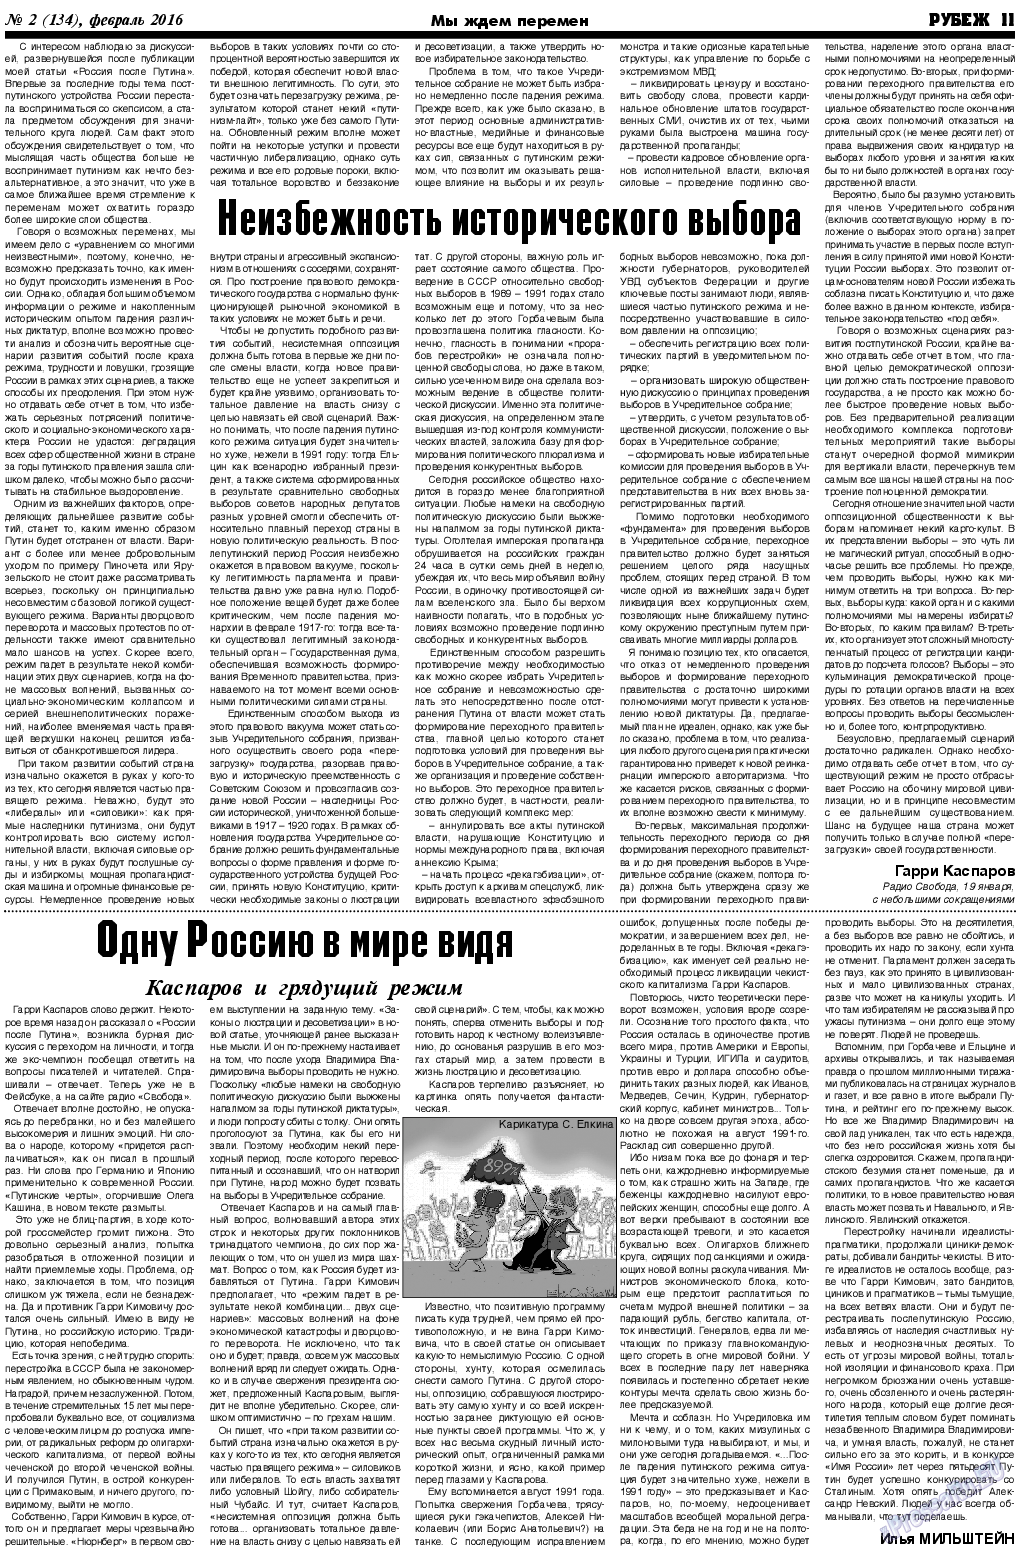 Рубеж, газета. 2016 №2 стр.11